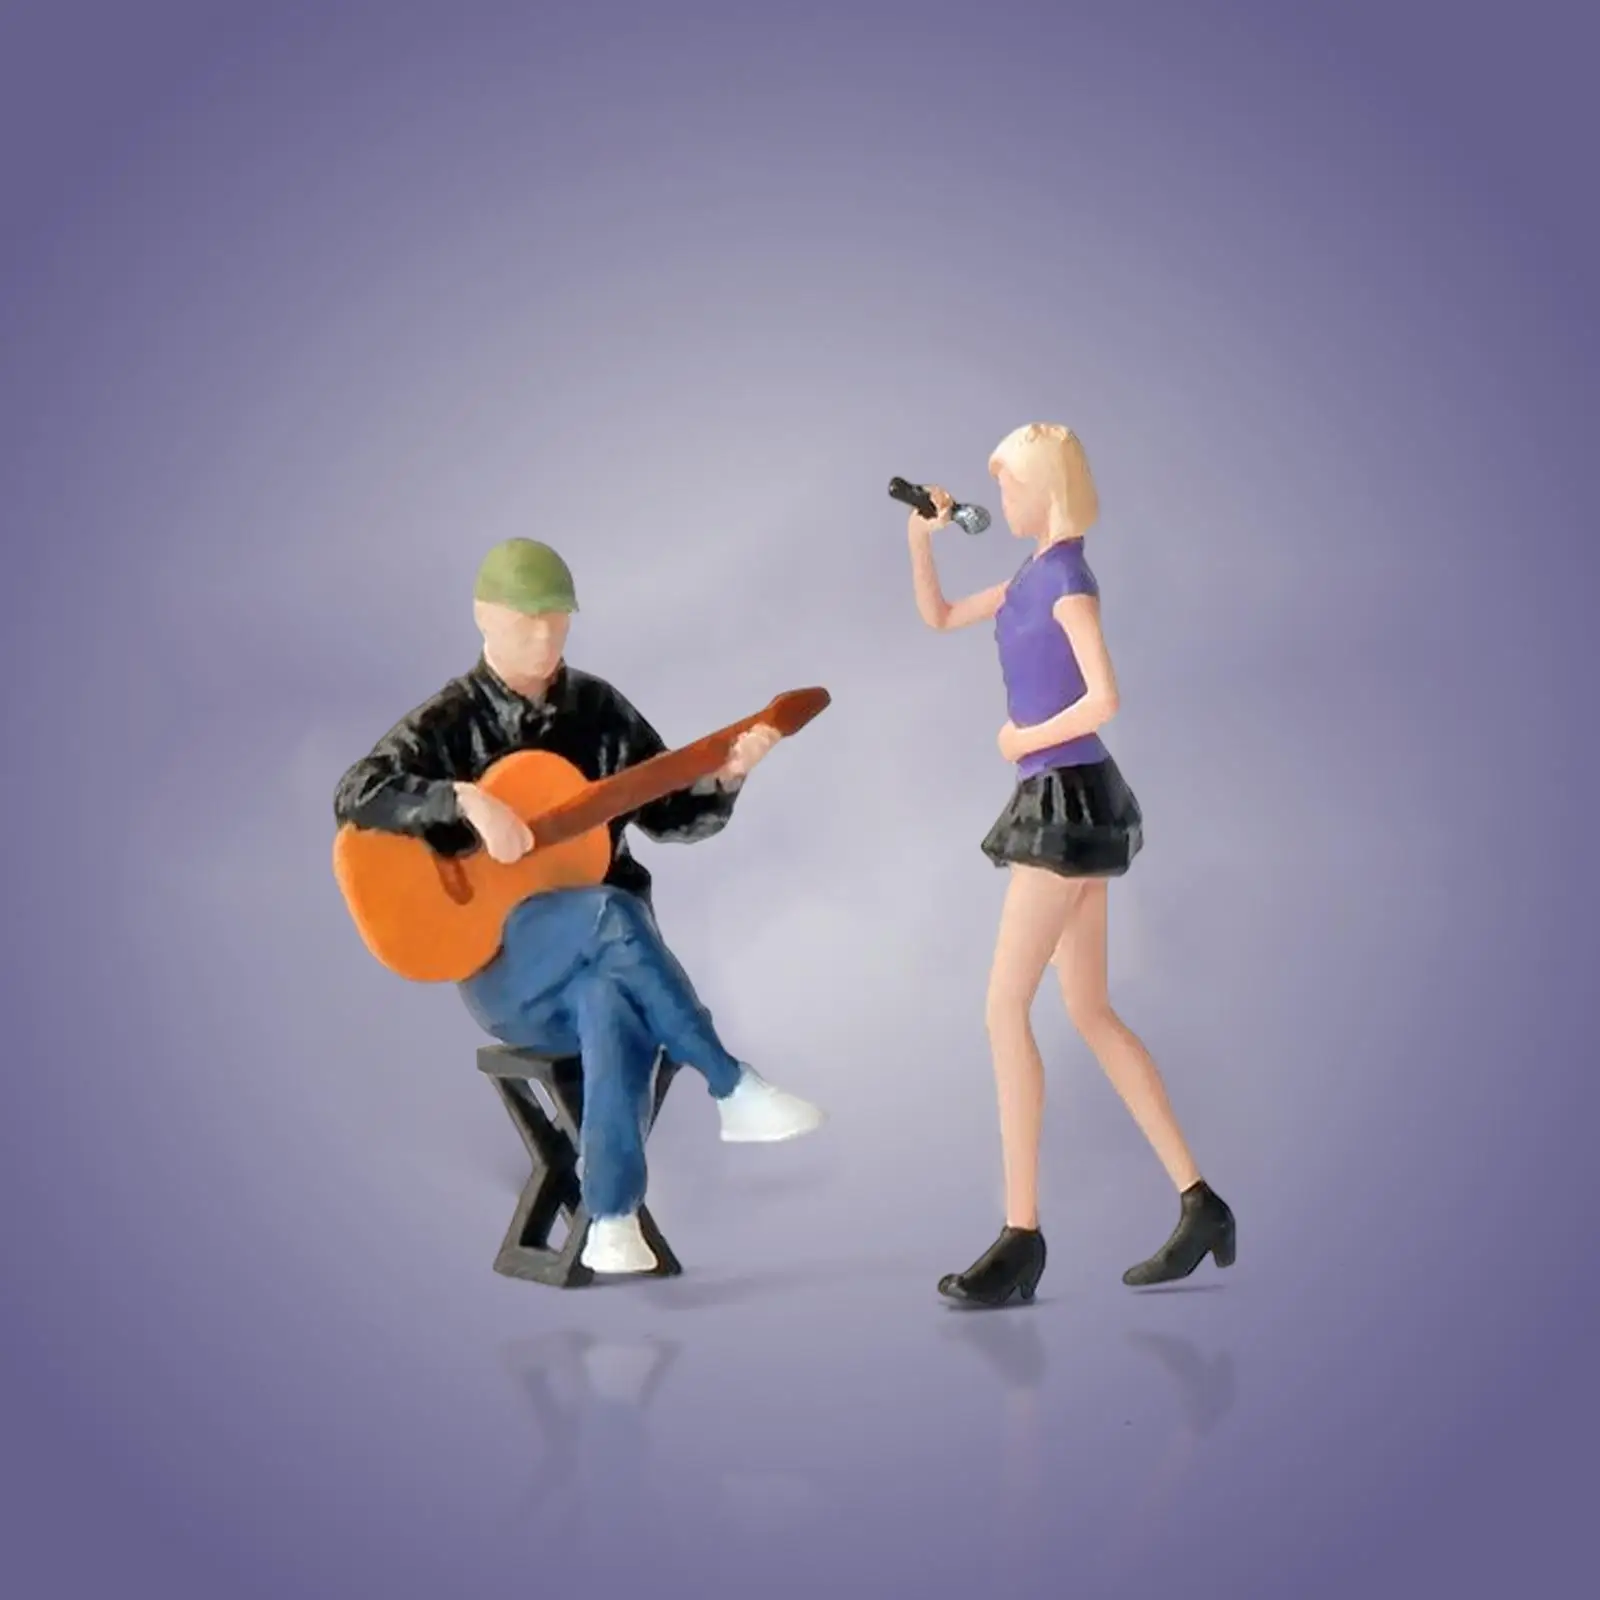 Guitarist and Singer Figures Model Trains People Figures Realistic Miniature Simulation for DIY Scene Diorama Dollhouse Decor